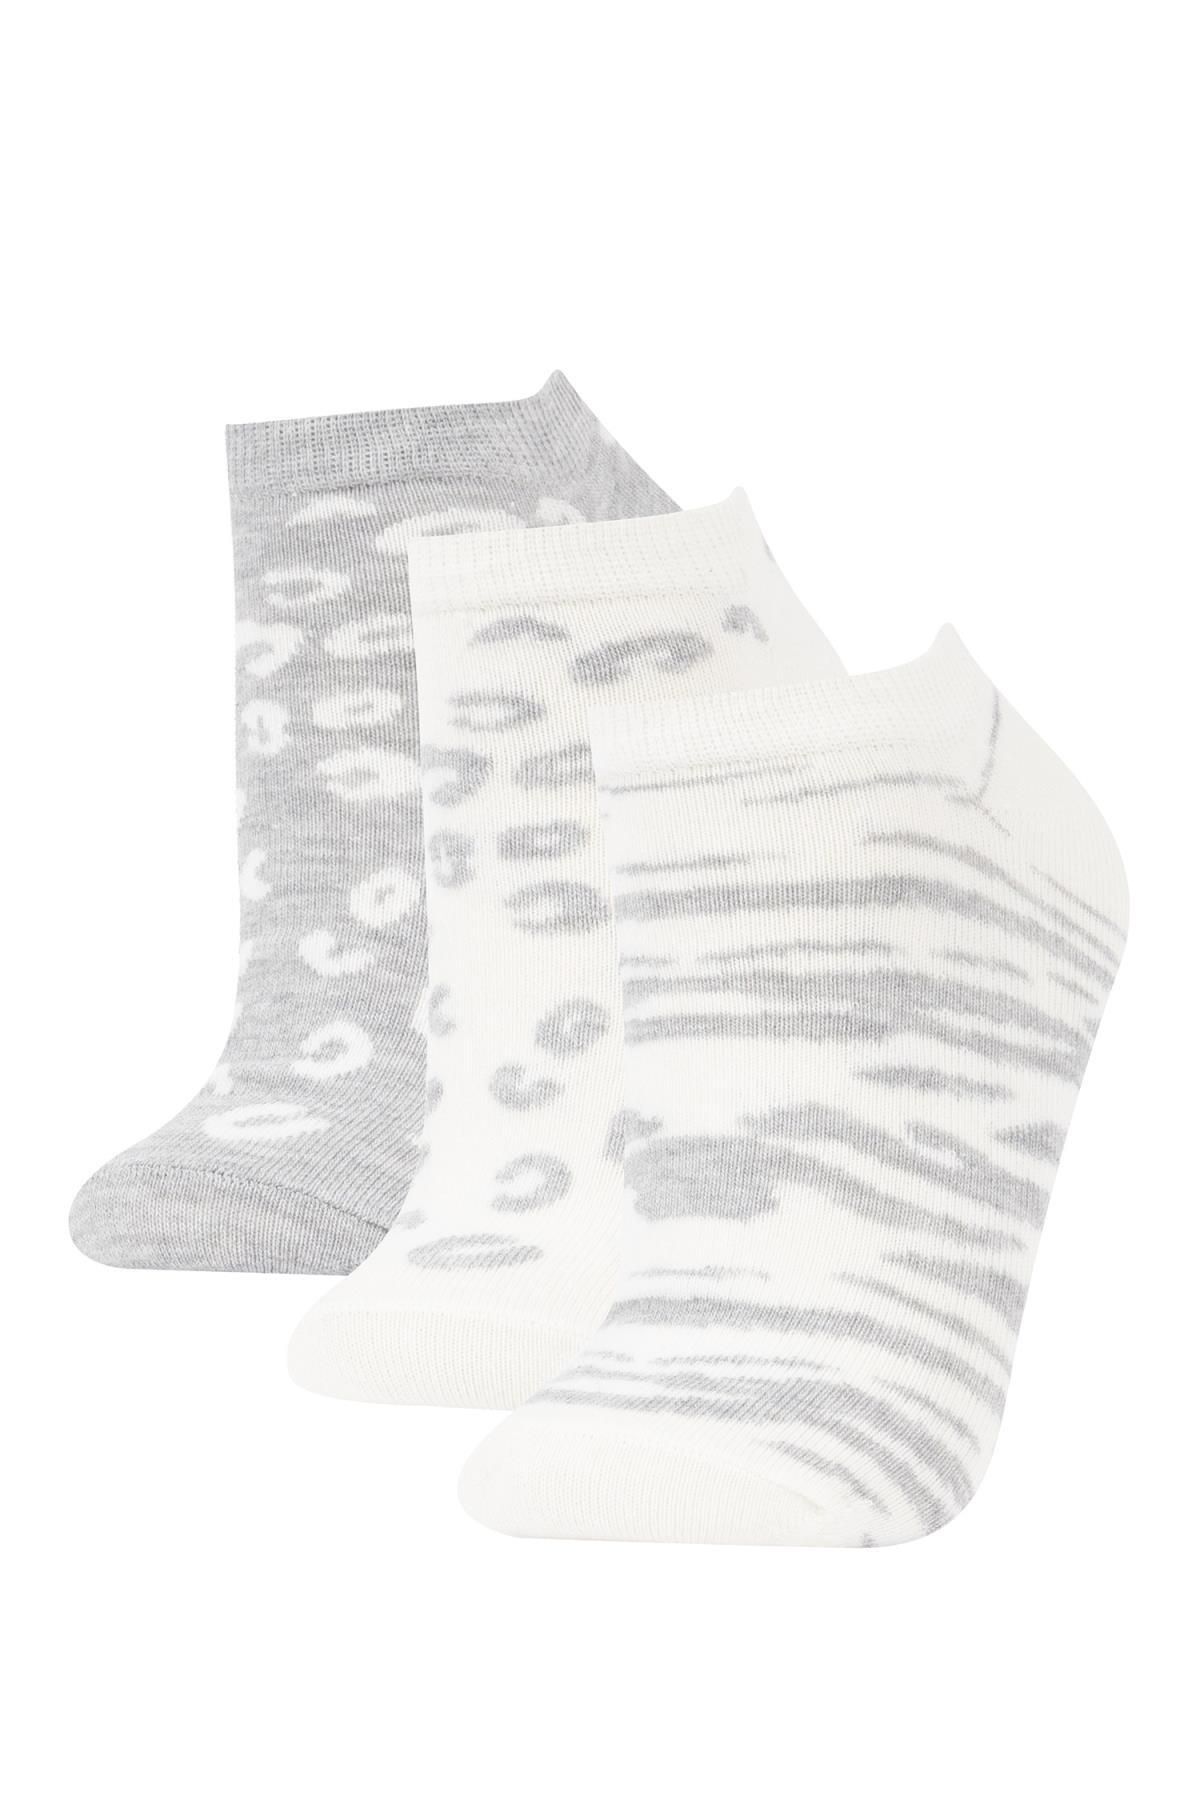 Defacto Kadın 3'lü Pamuklu Patik Çorap Z8625azns